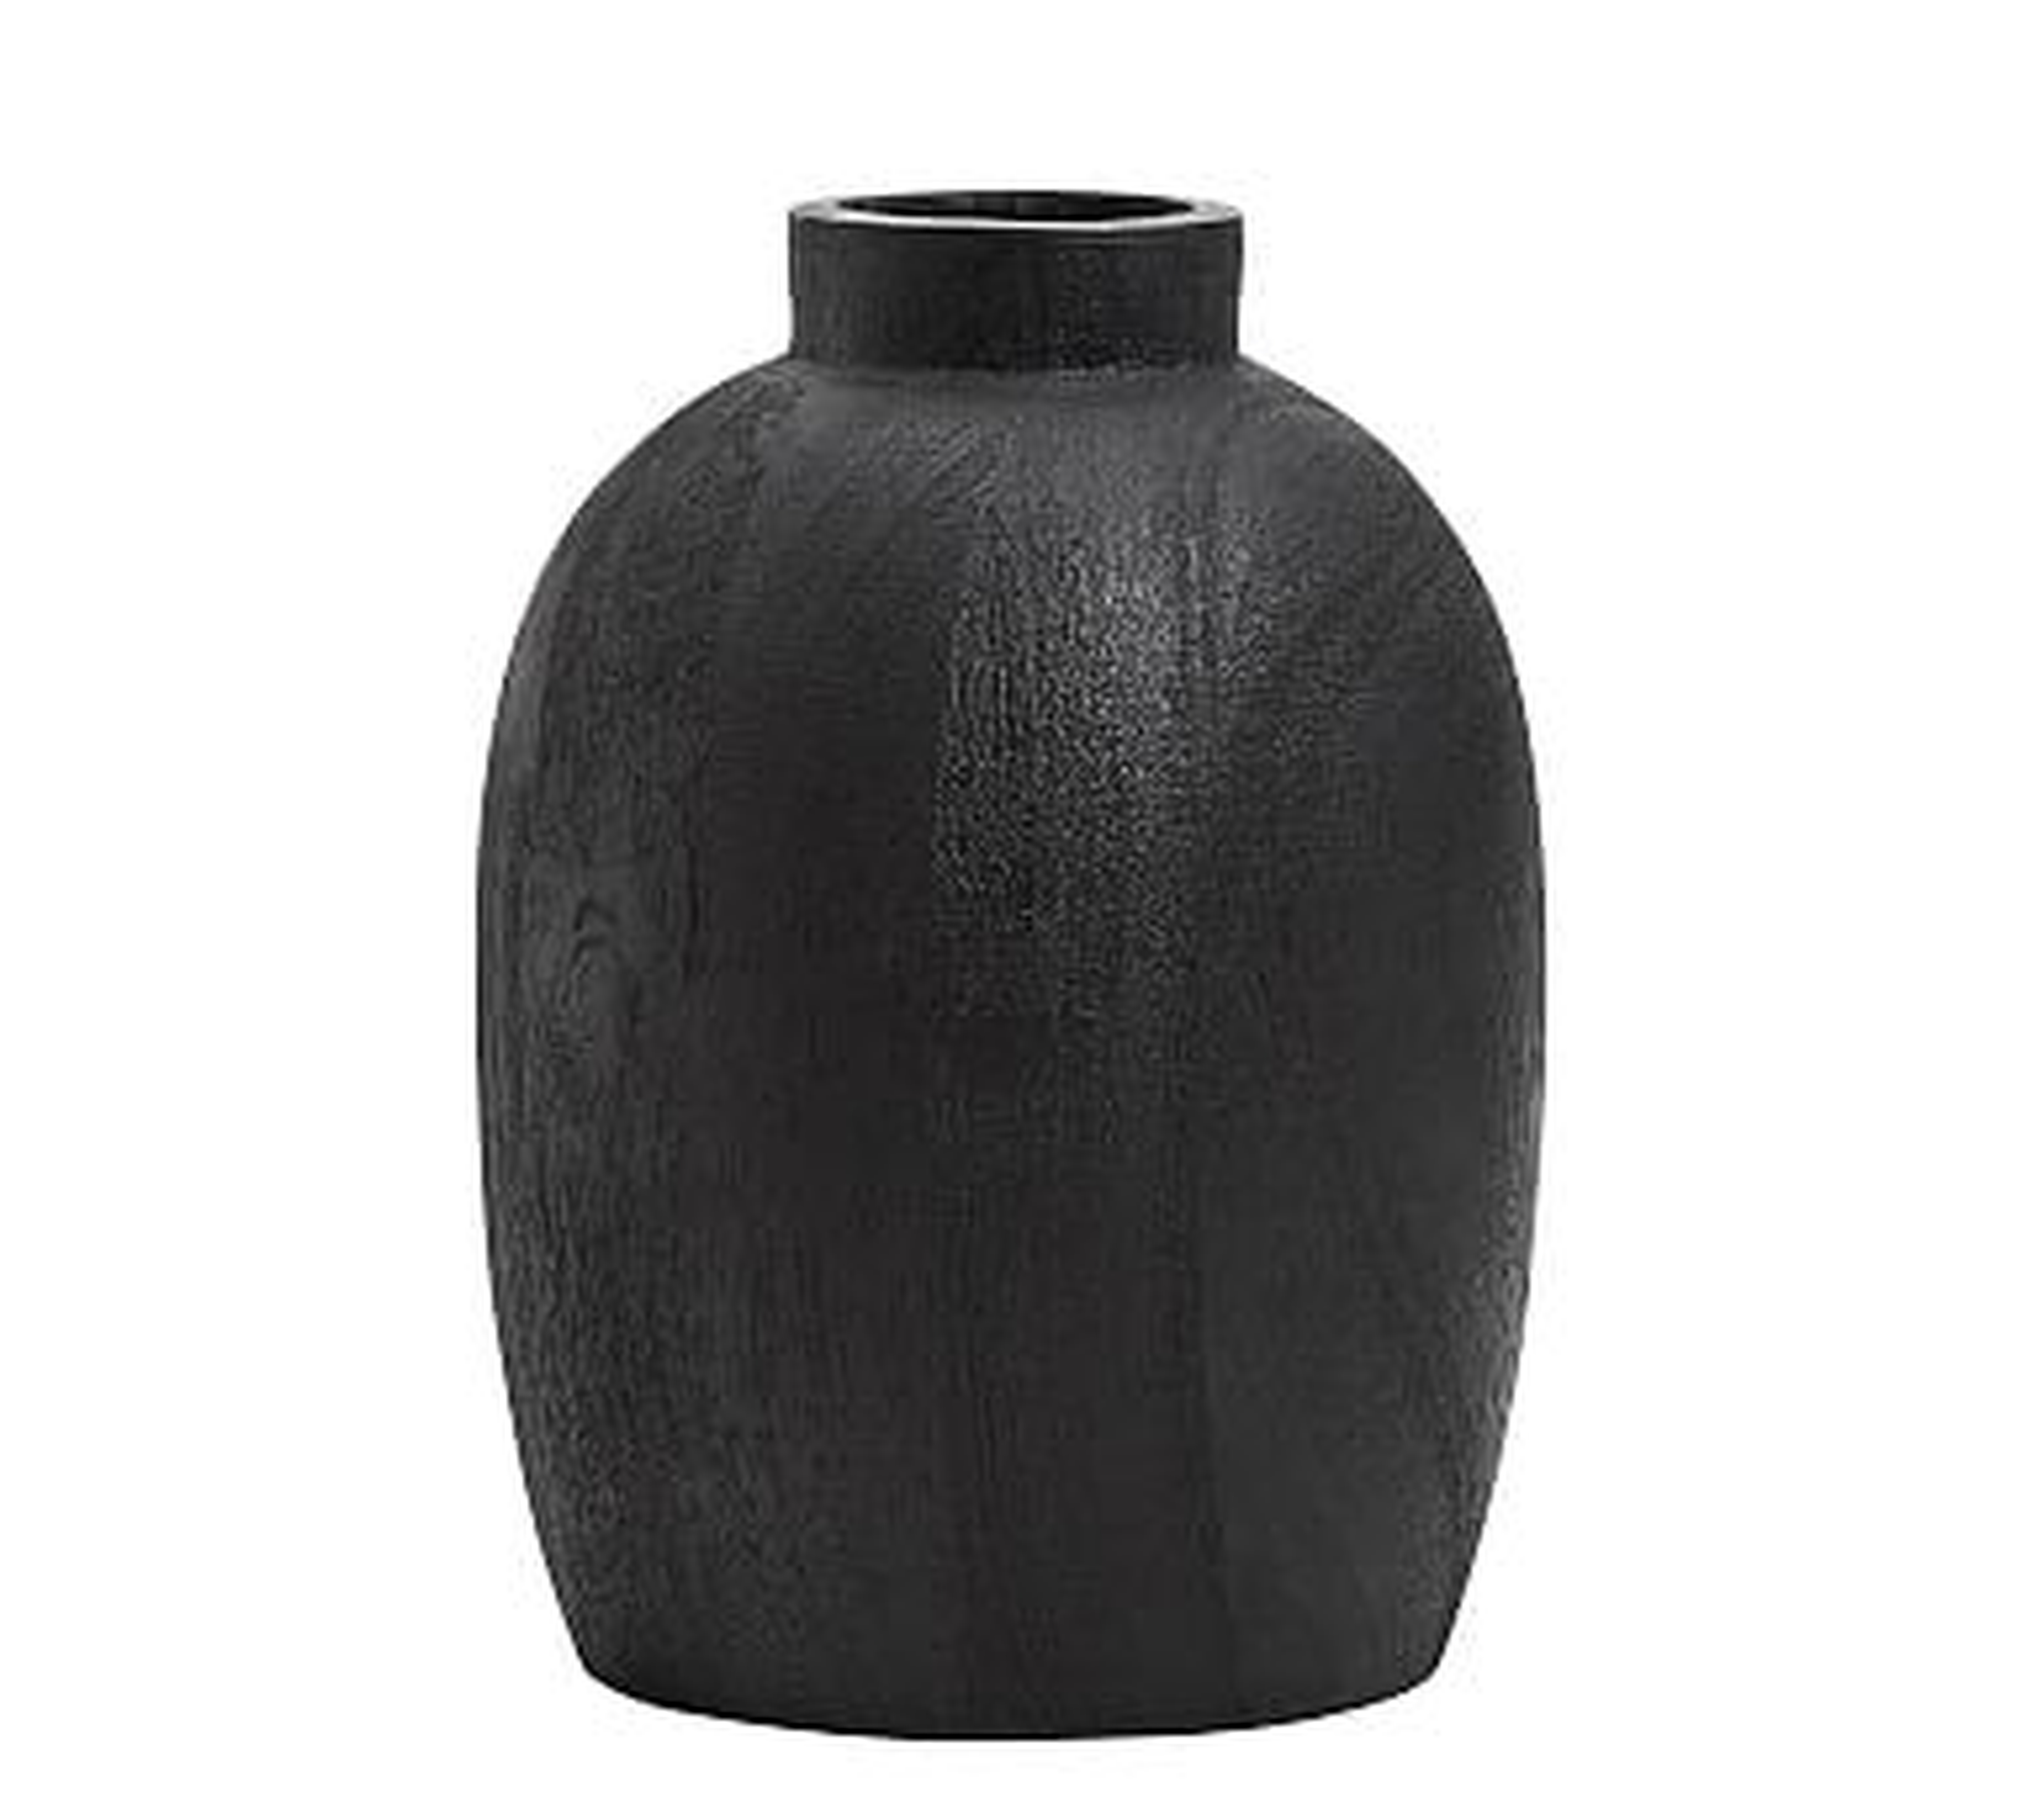 Burned Wooden Vase, Black, Small - Pottery Barn